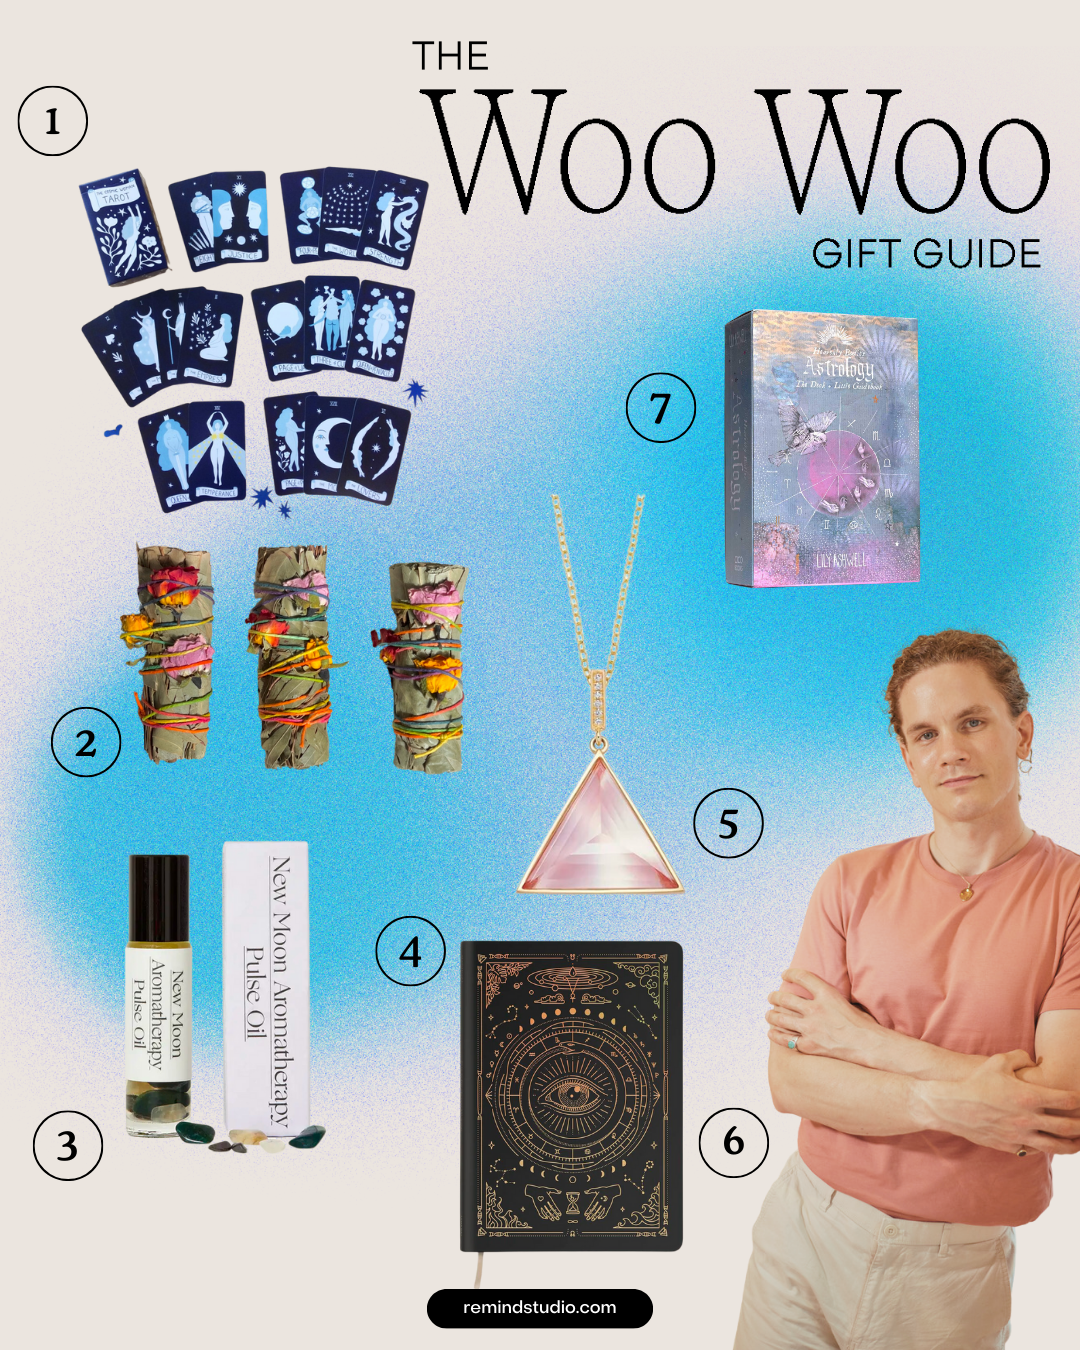 The Woo Woo Gift Guide